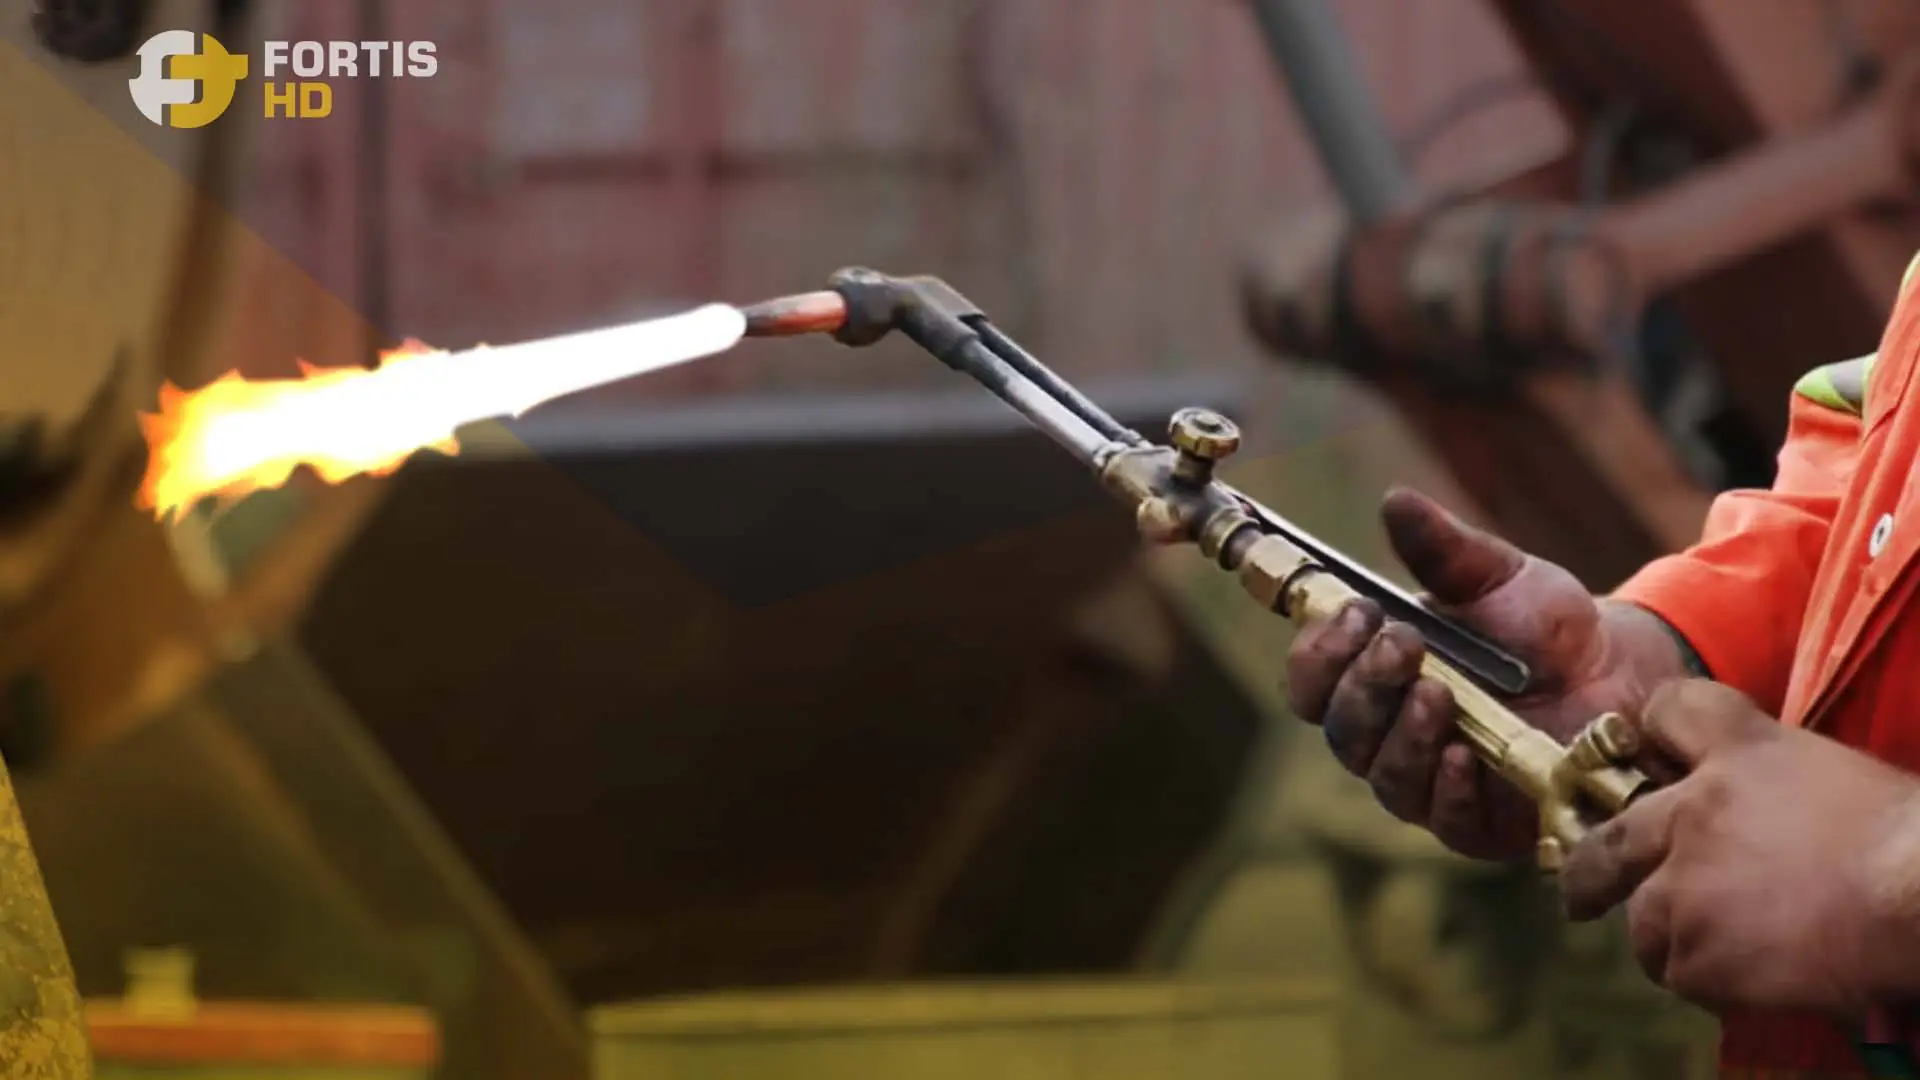 A heavy-duty mechanic uses a blowtorch.